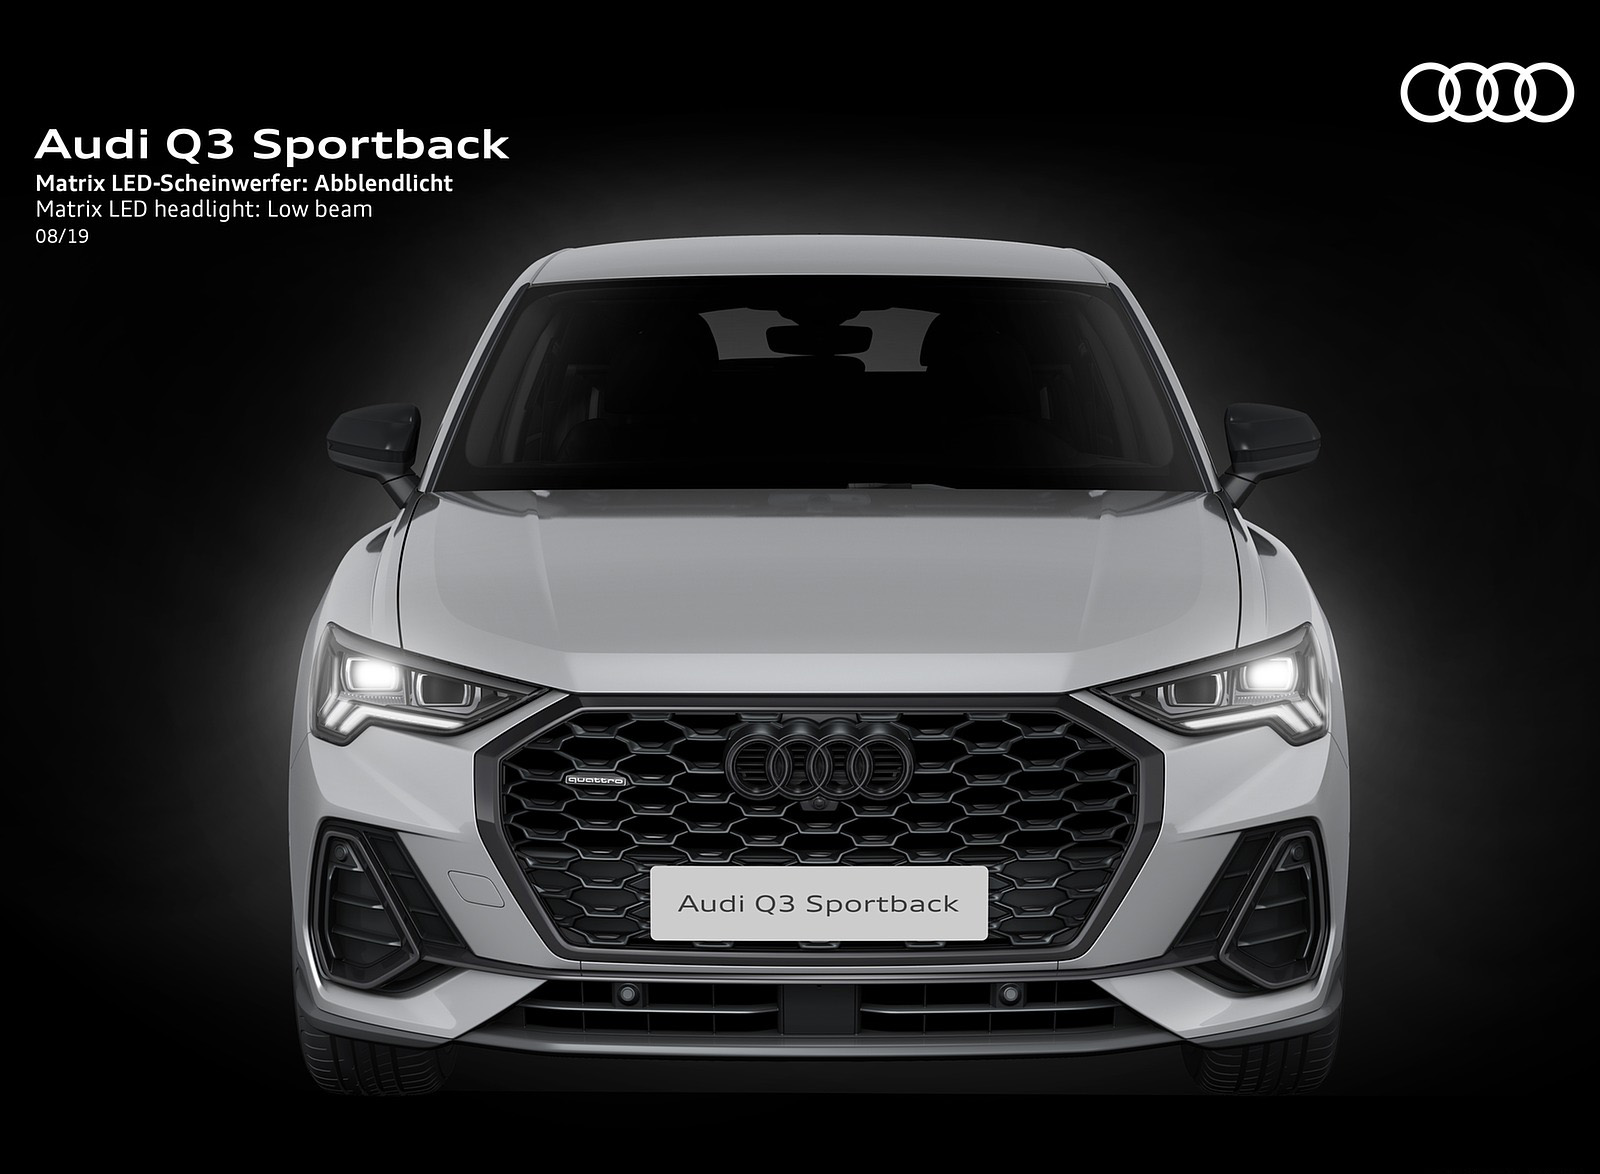 2020 Audi Q3 Sportback Matrix LED headlight Low beam Wallpapers #240 of 285